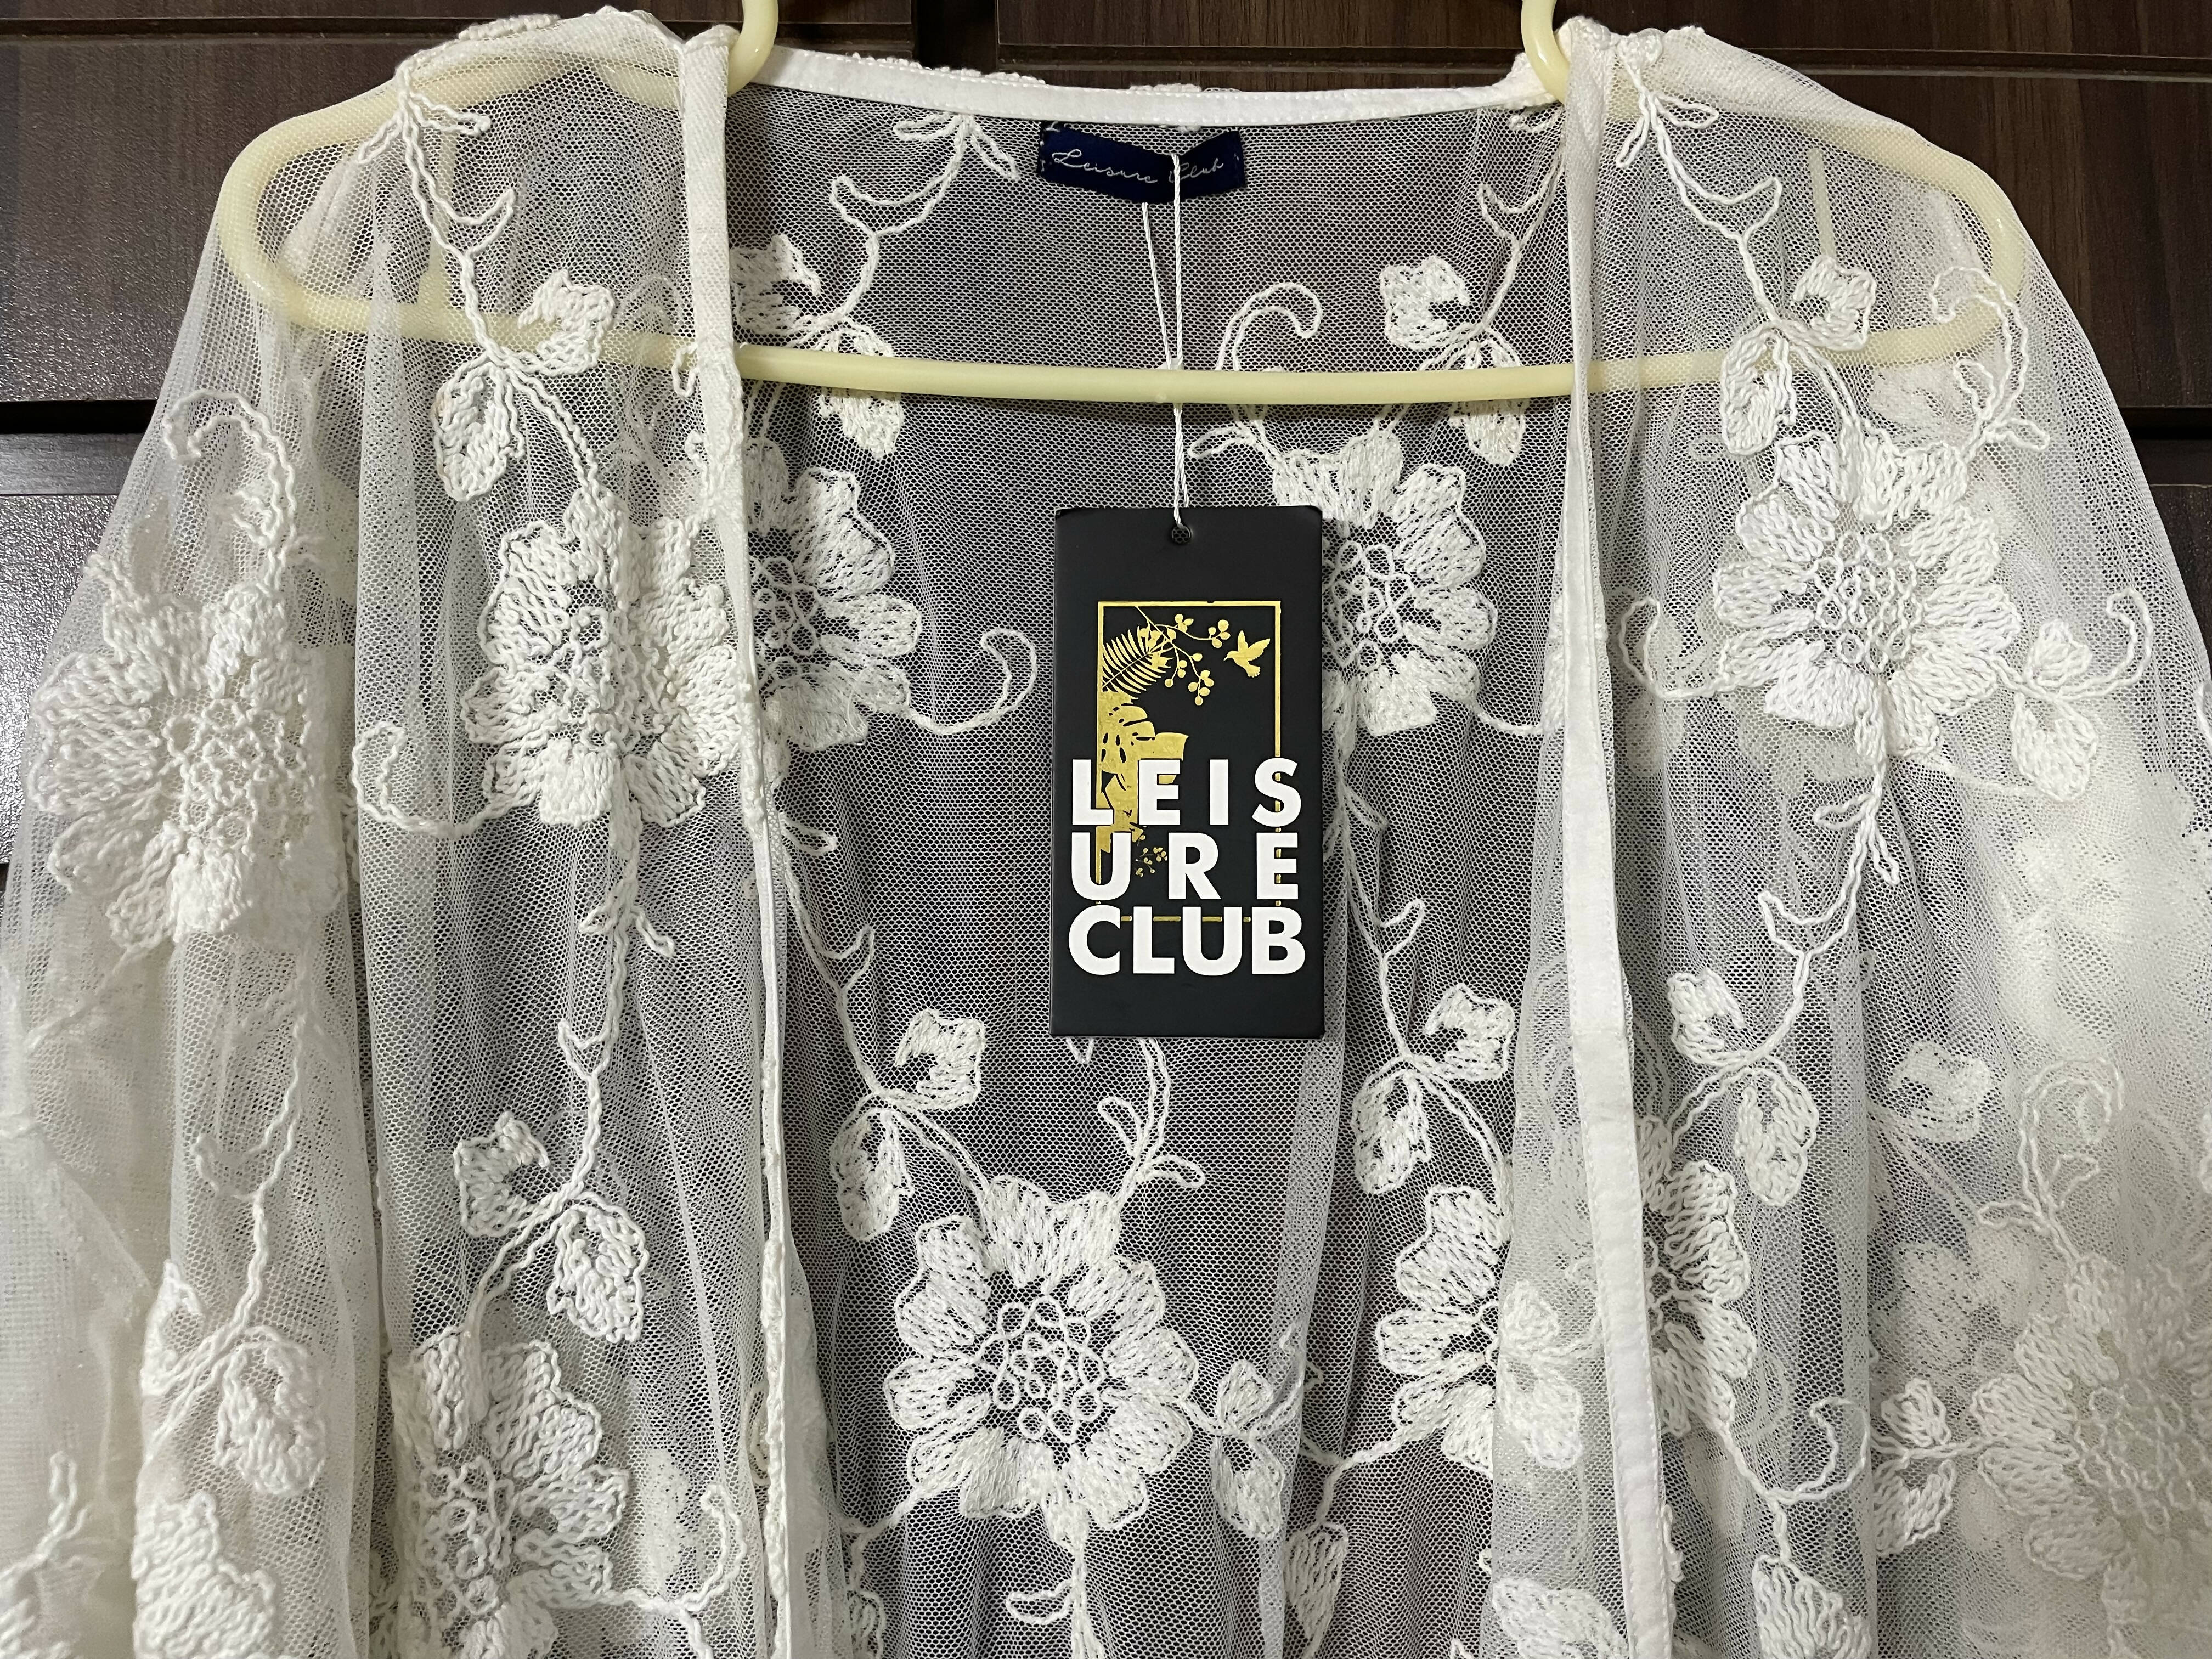 Liesure club | White Top Net | Women Top & Shirts | Brand New